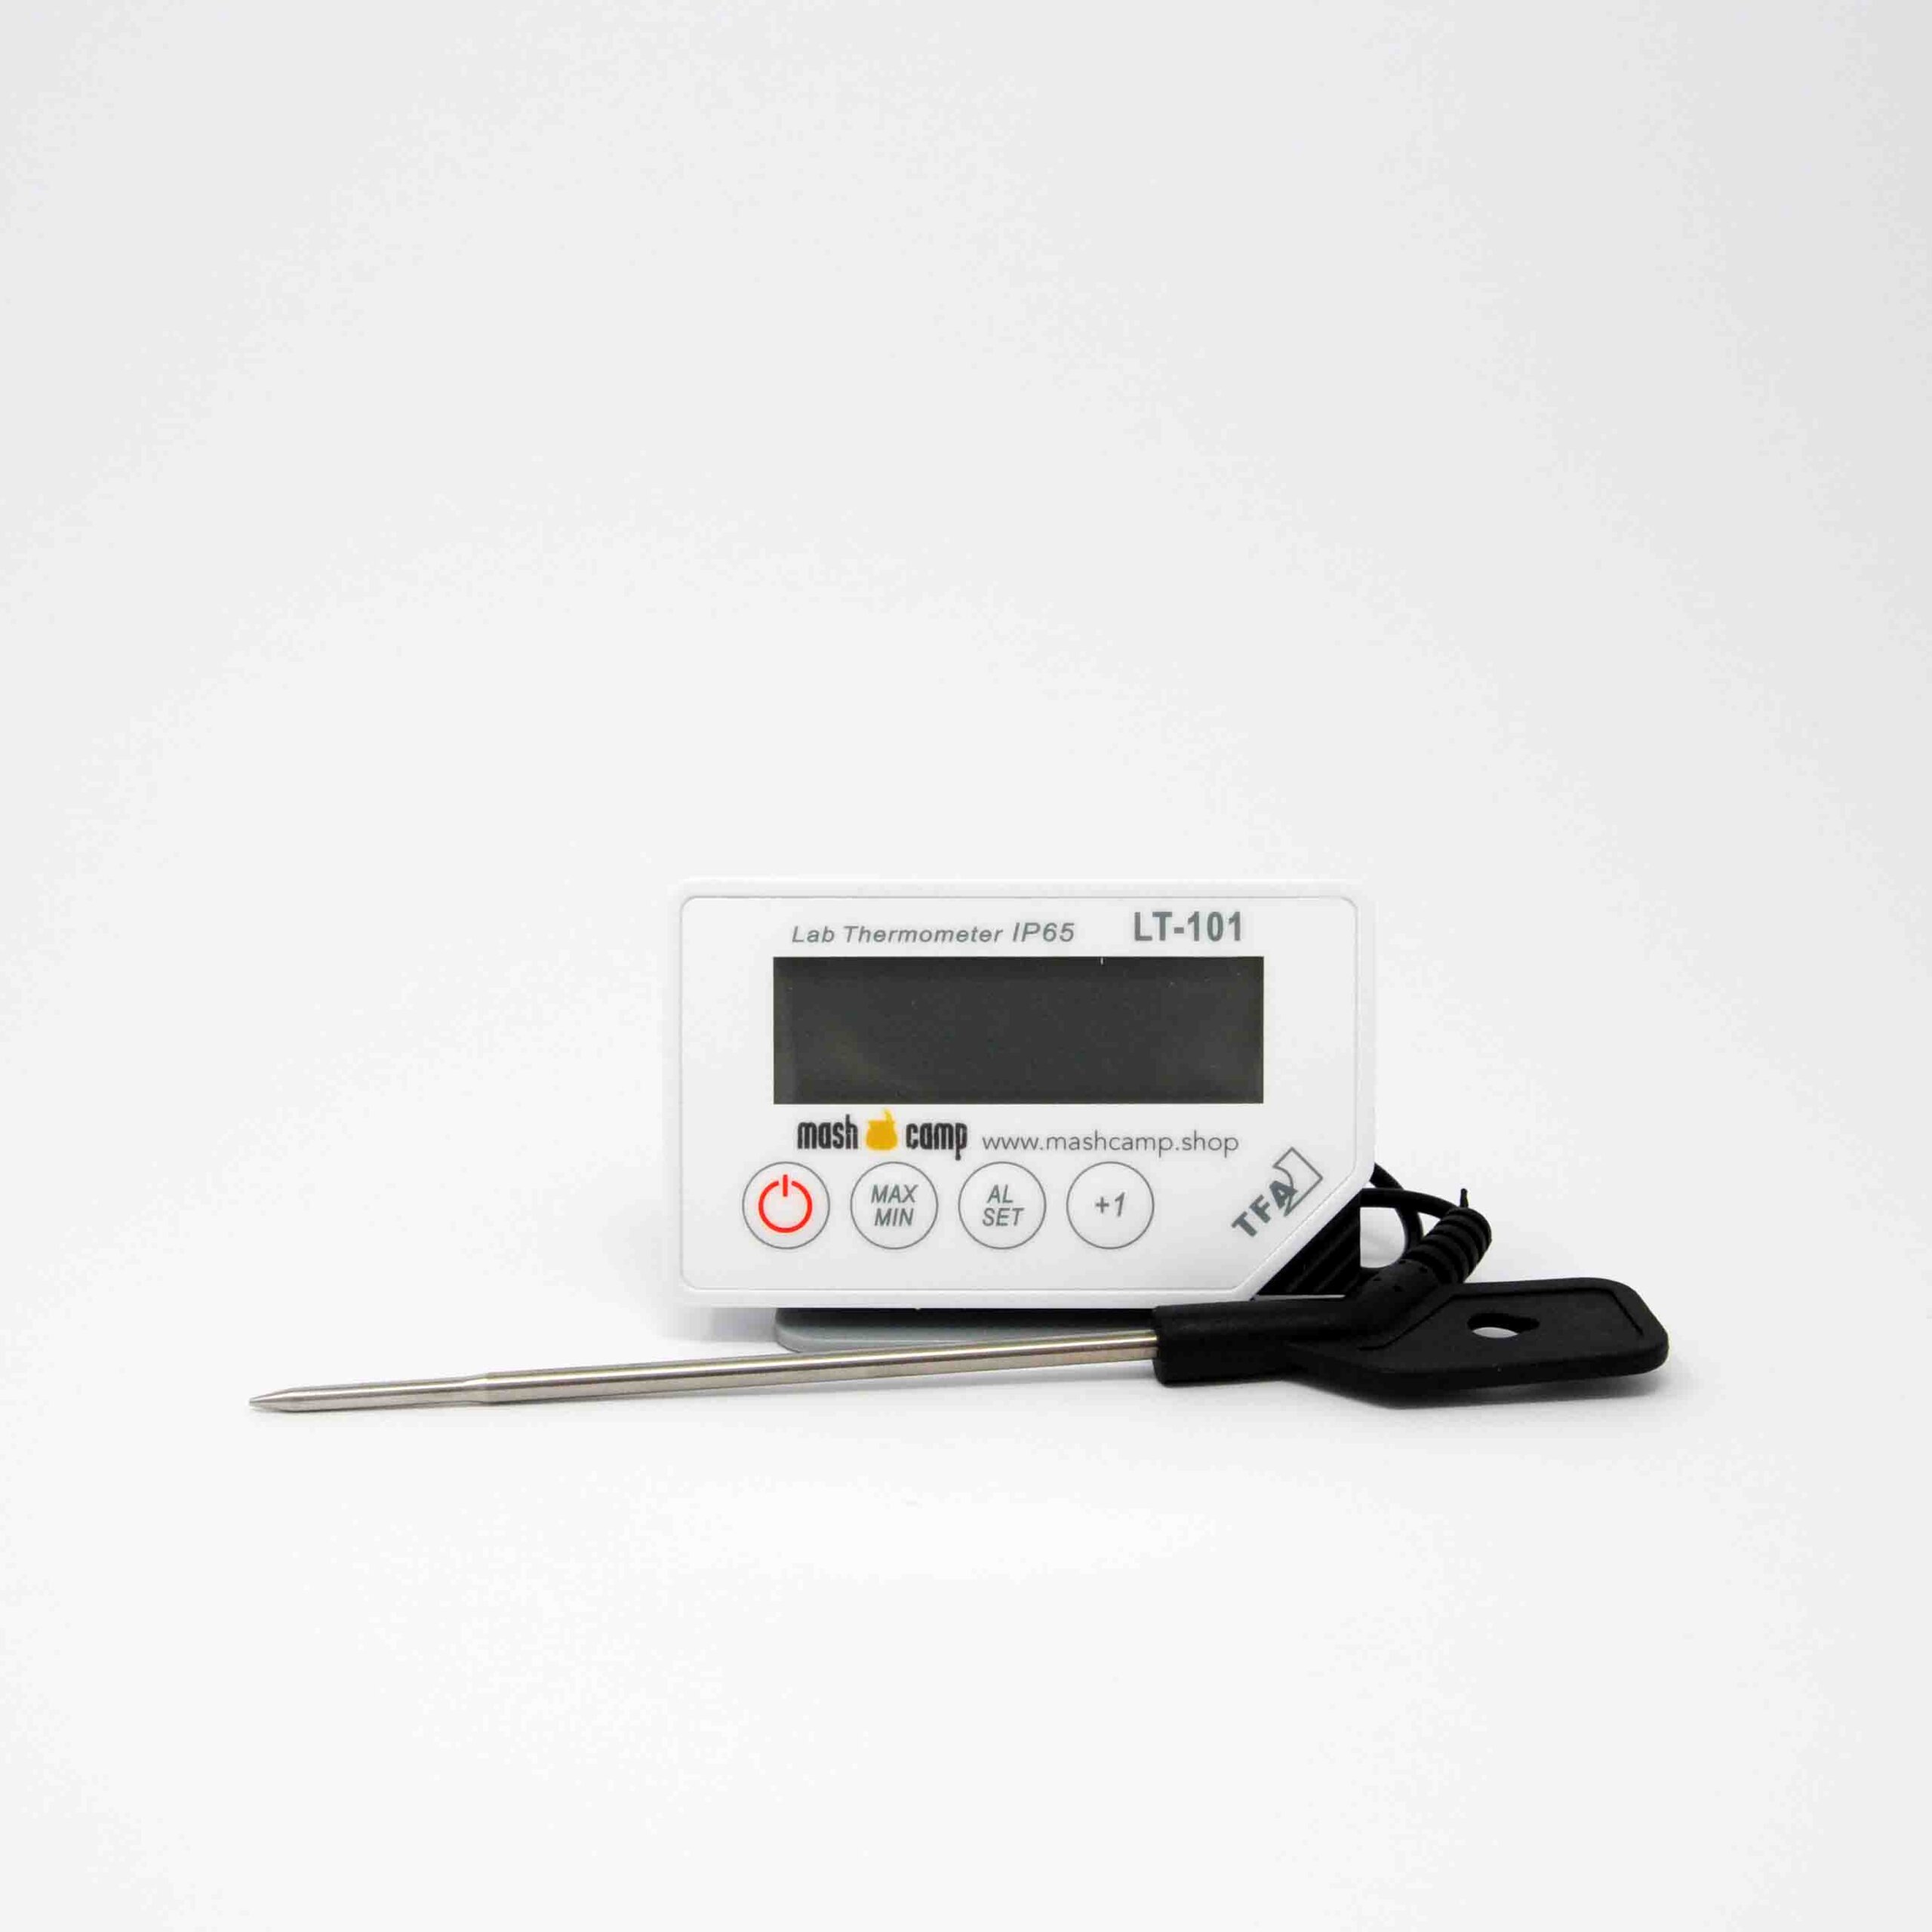 Temperatur Messgerät Laborthermometer - Digital - Wachtelshop